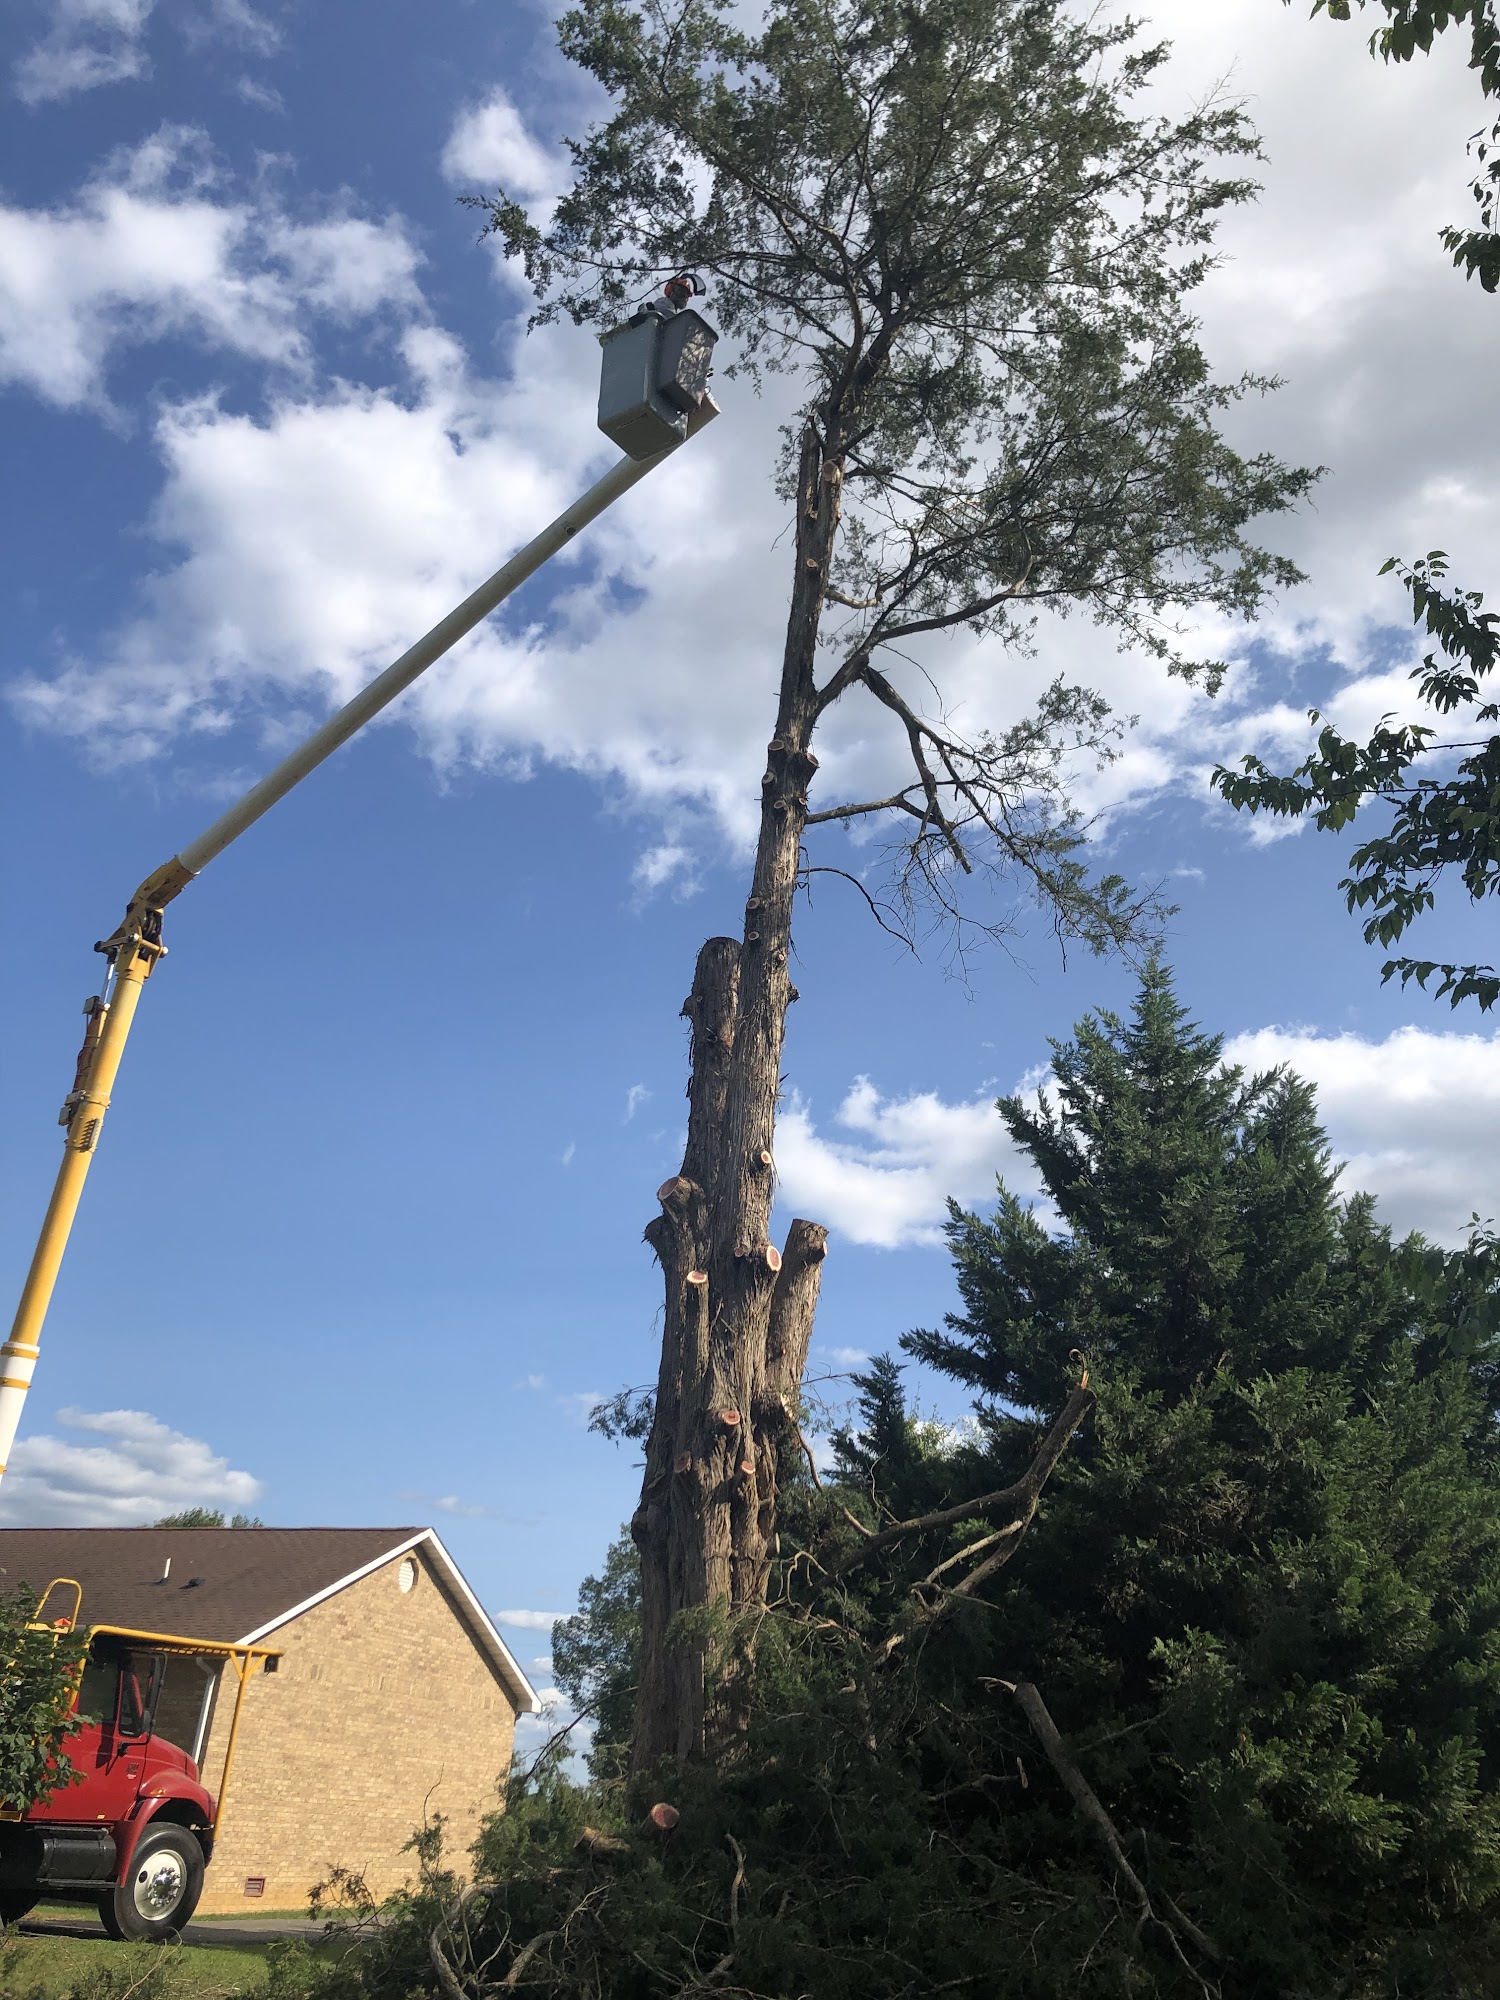 Timber Loving Care Tree Service